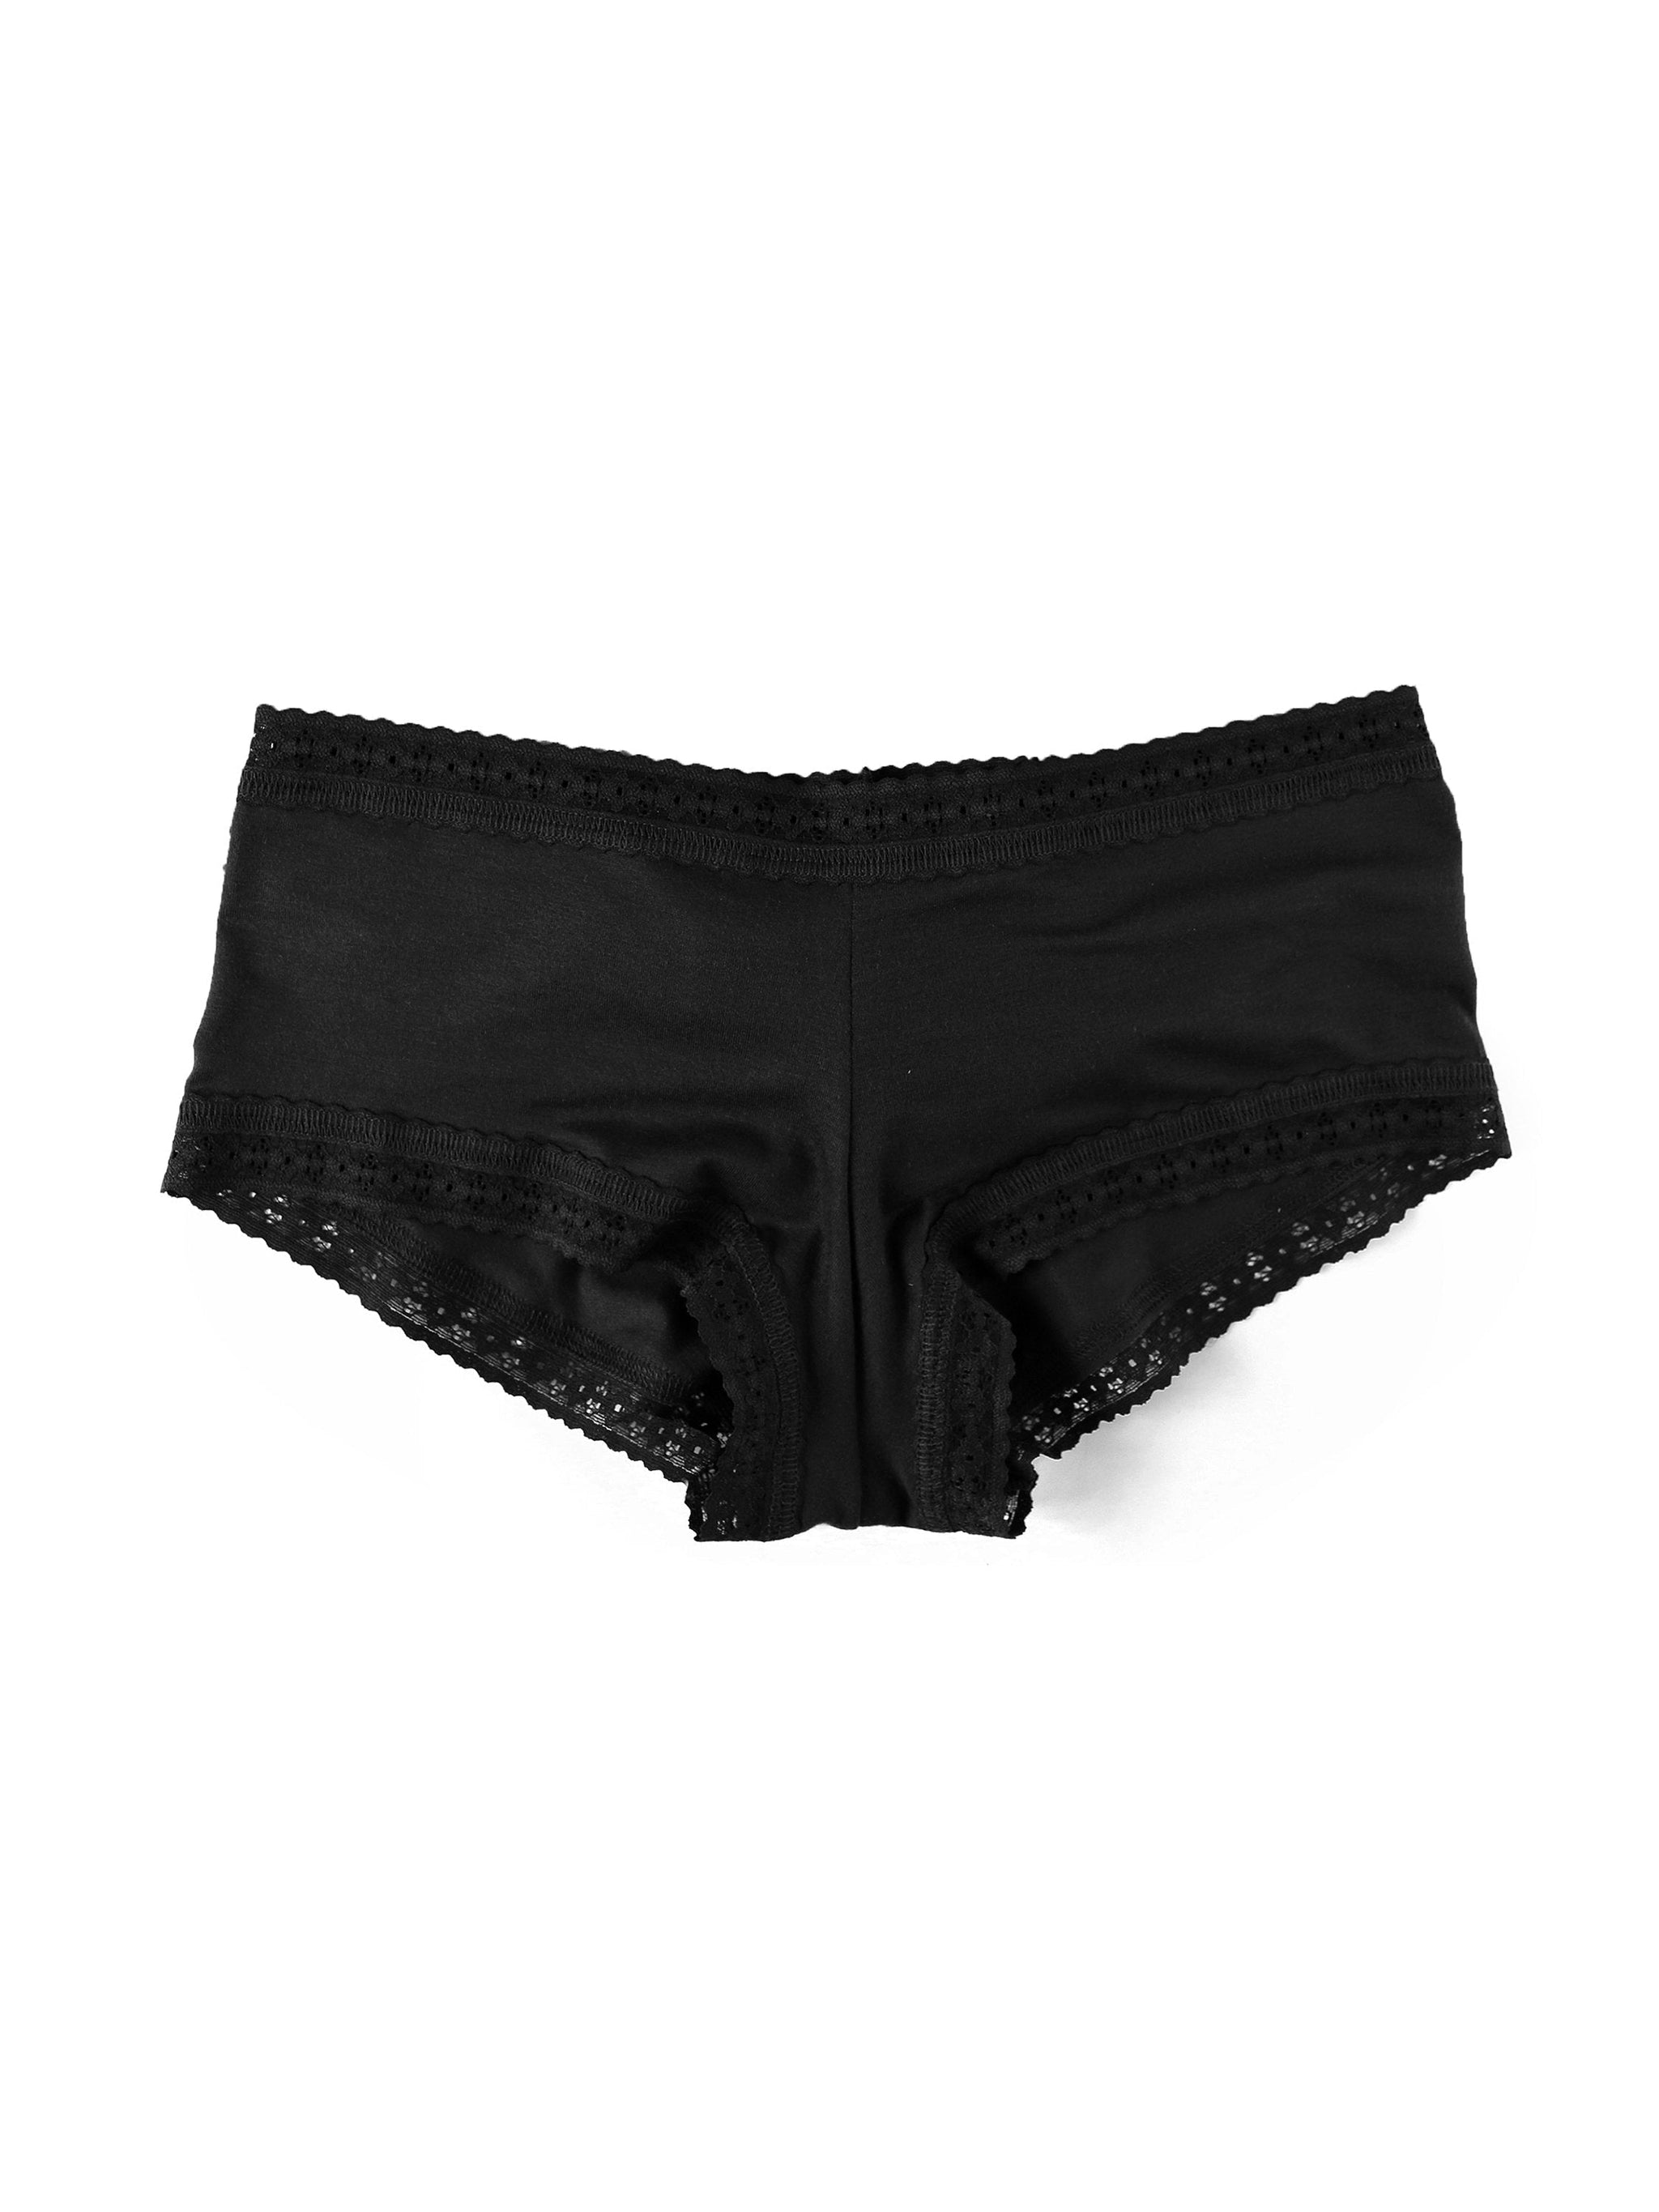 Women's Lace Trim Cotton Boy Shorts Underwear - Auden™ Black 2x